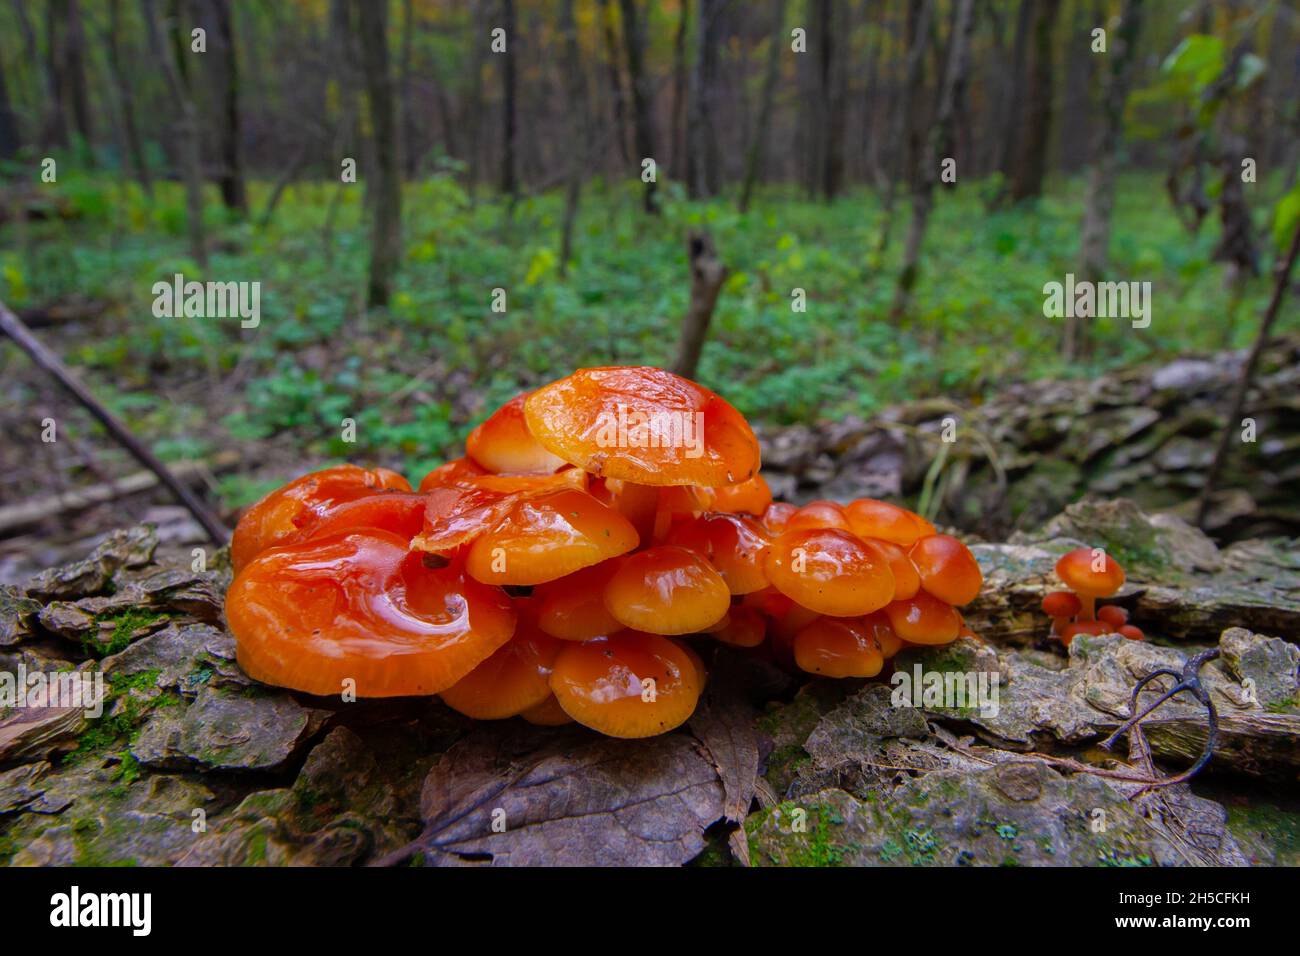 Slimy Orange Fungus On A Log Stock Photo